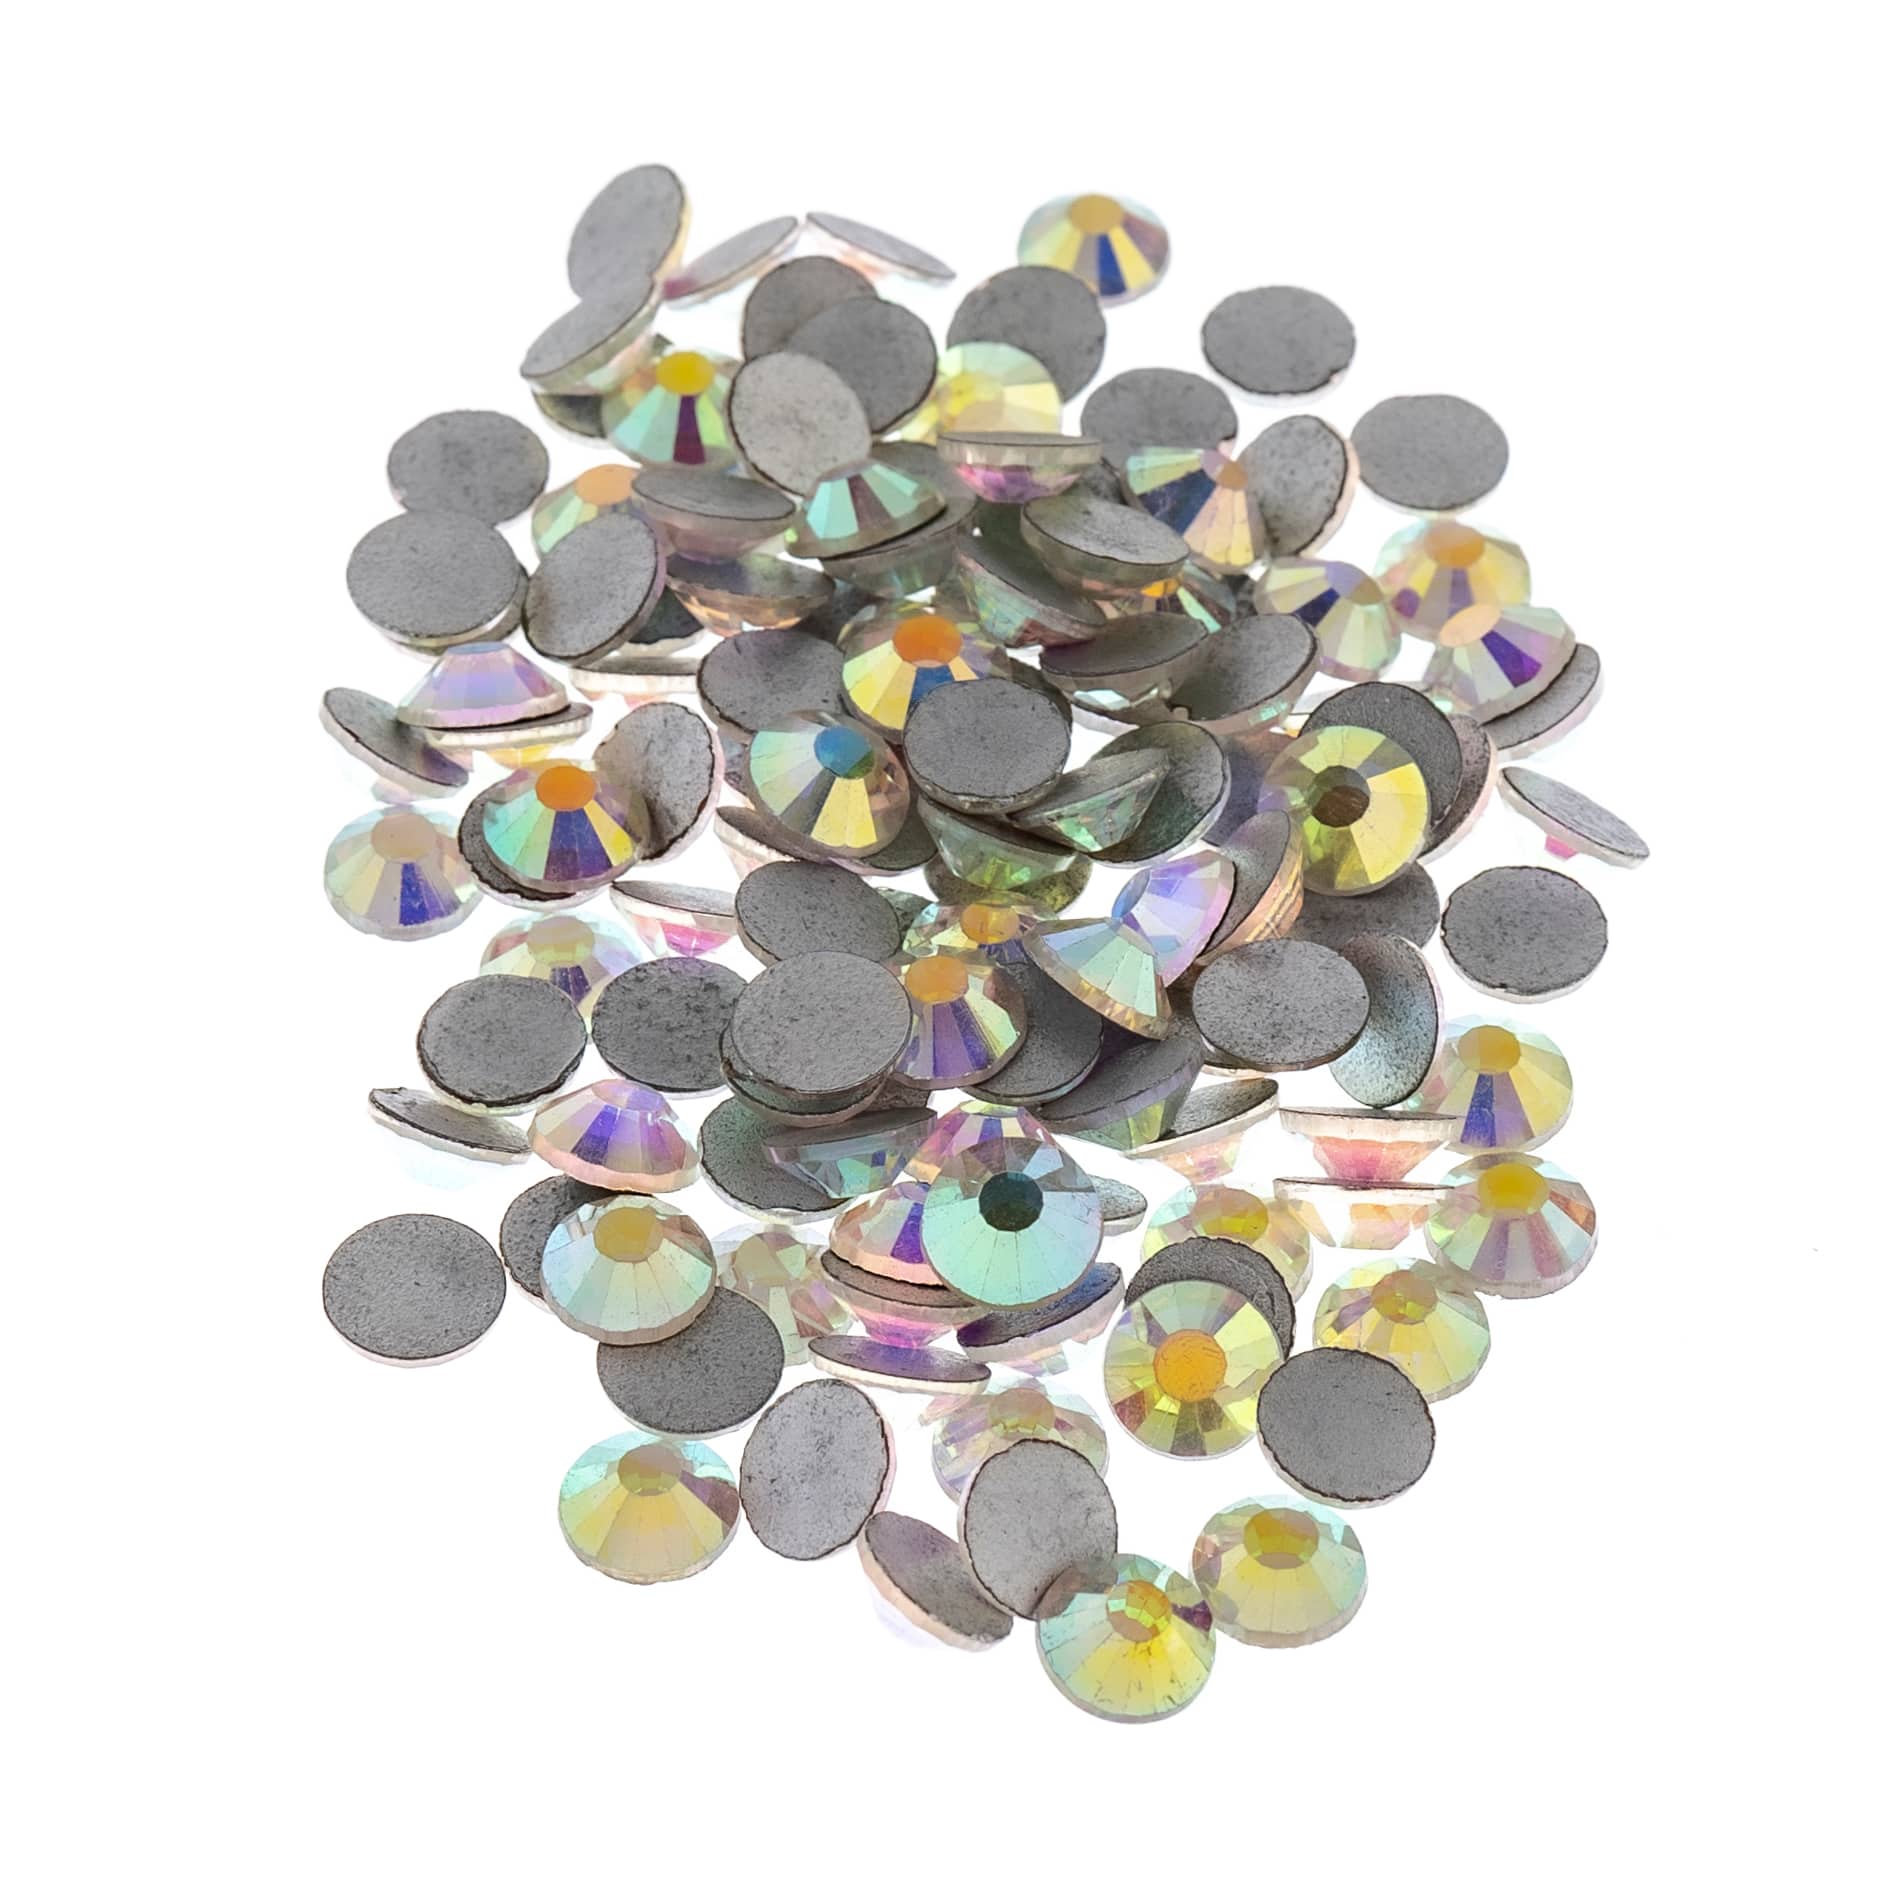 Metallic Silver flat back crystal rhinestones loose flatback rhinestone  crystals glass beads 2mm 3mm 4mm 5mm 6mm Mixed Sizes